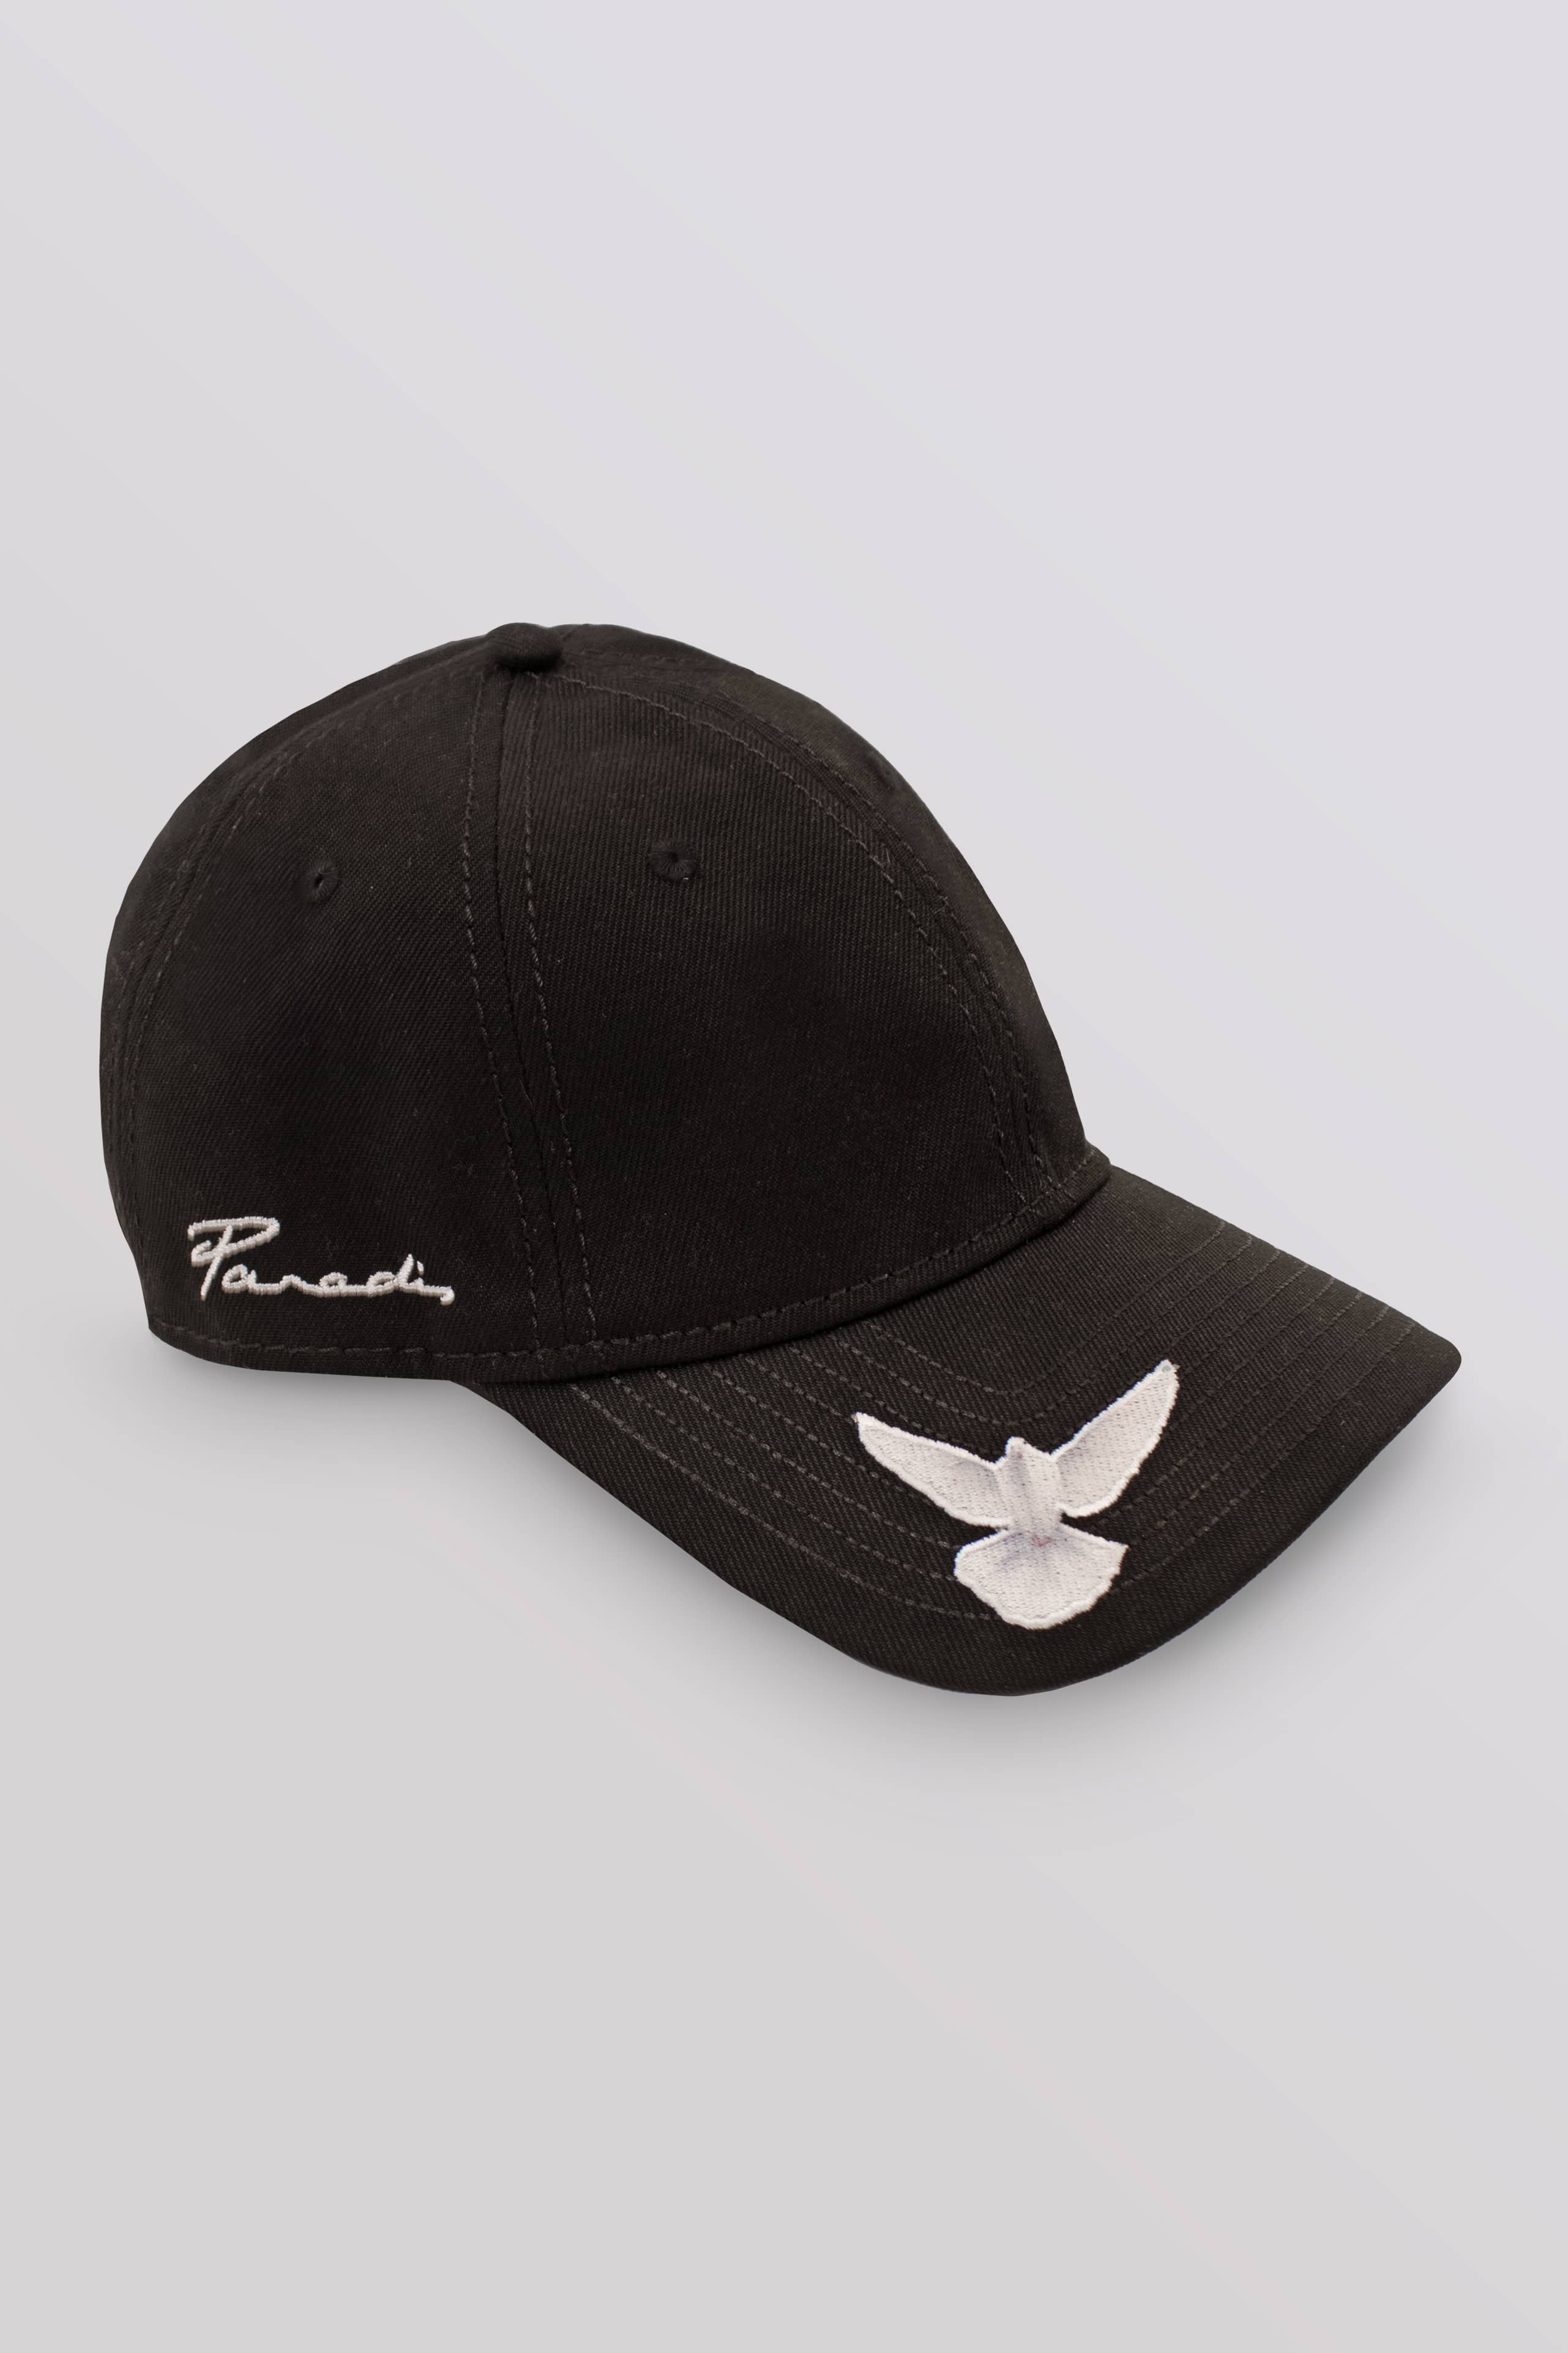 3.PARADIS x New Era -  9TWENTY Cap with Dove Brim